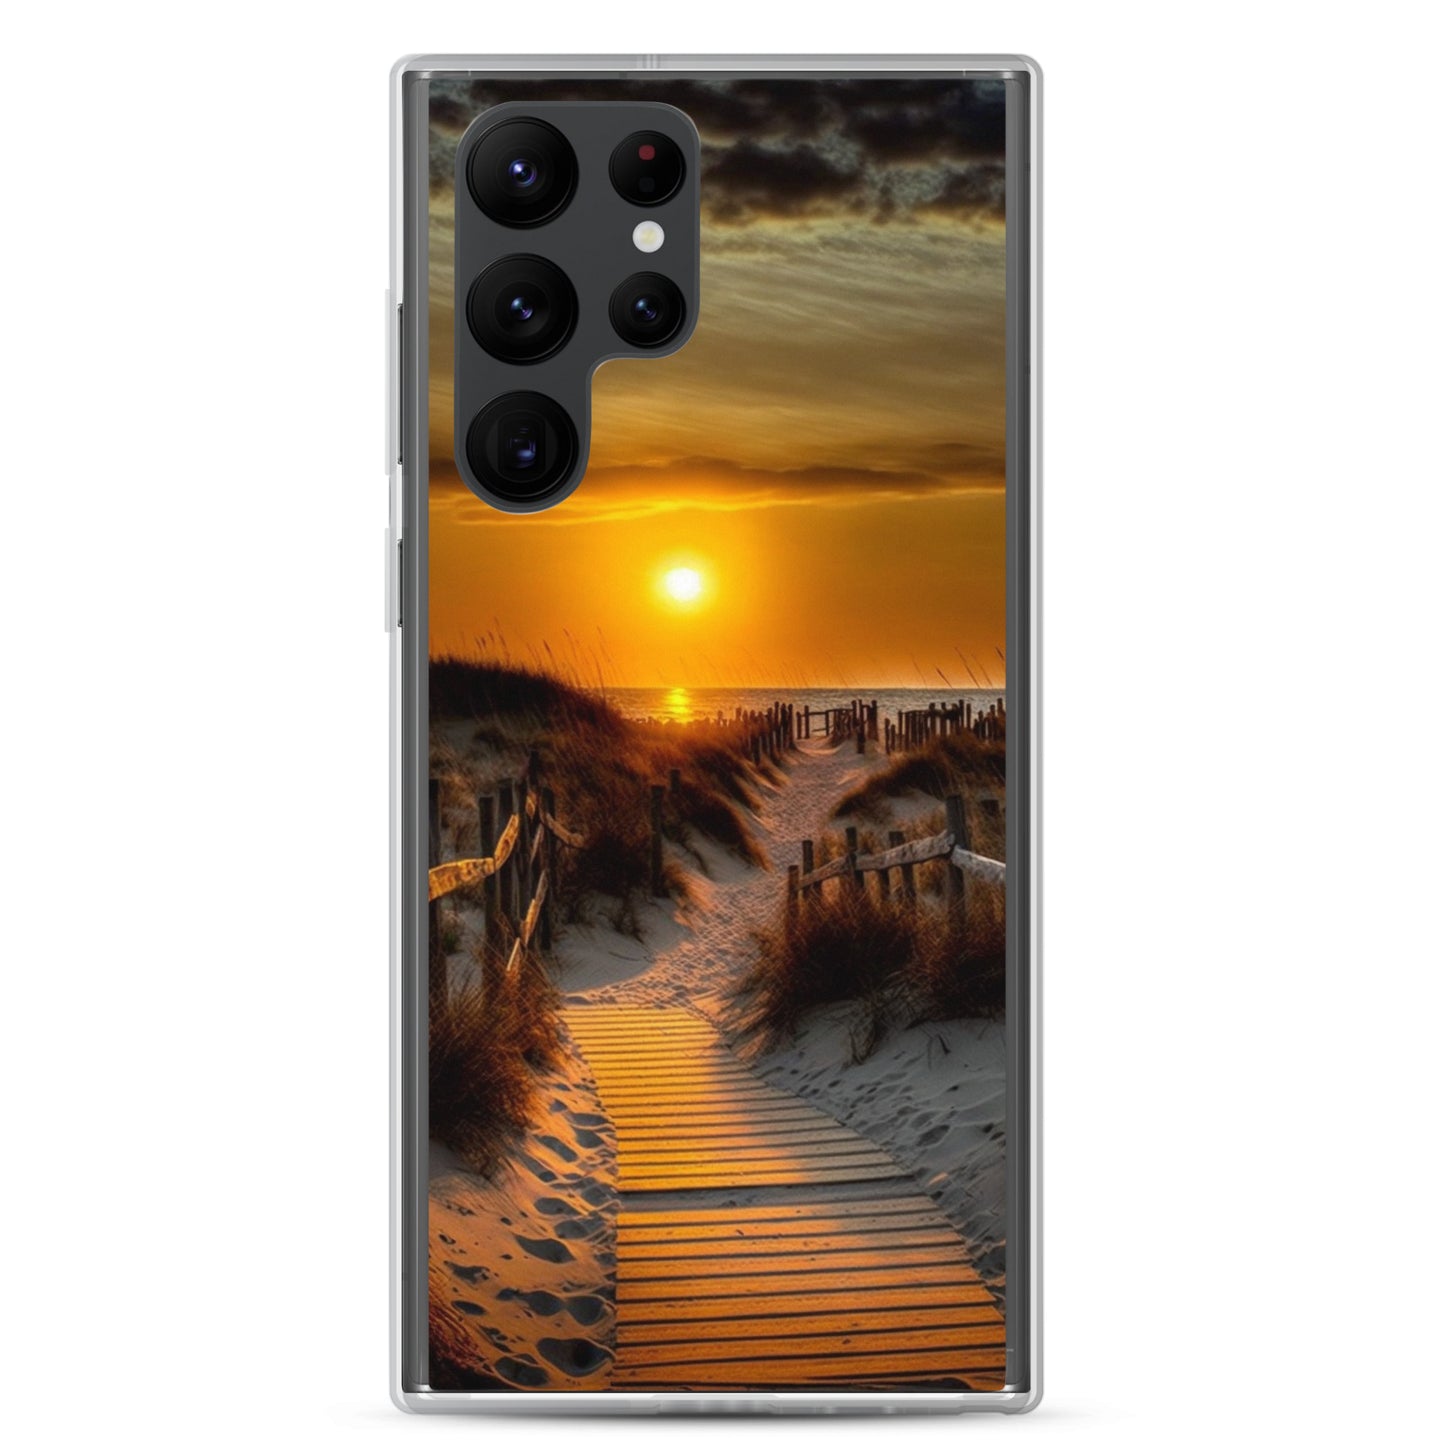 Samsung Case - Beach Life - Sunset Path